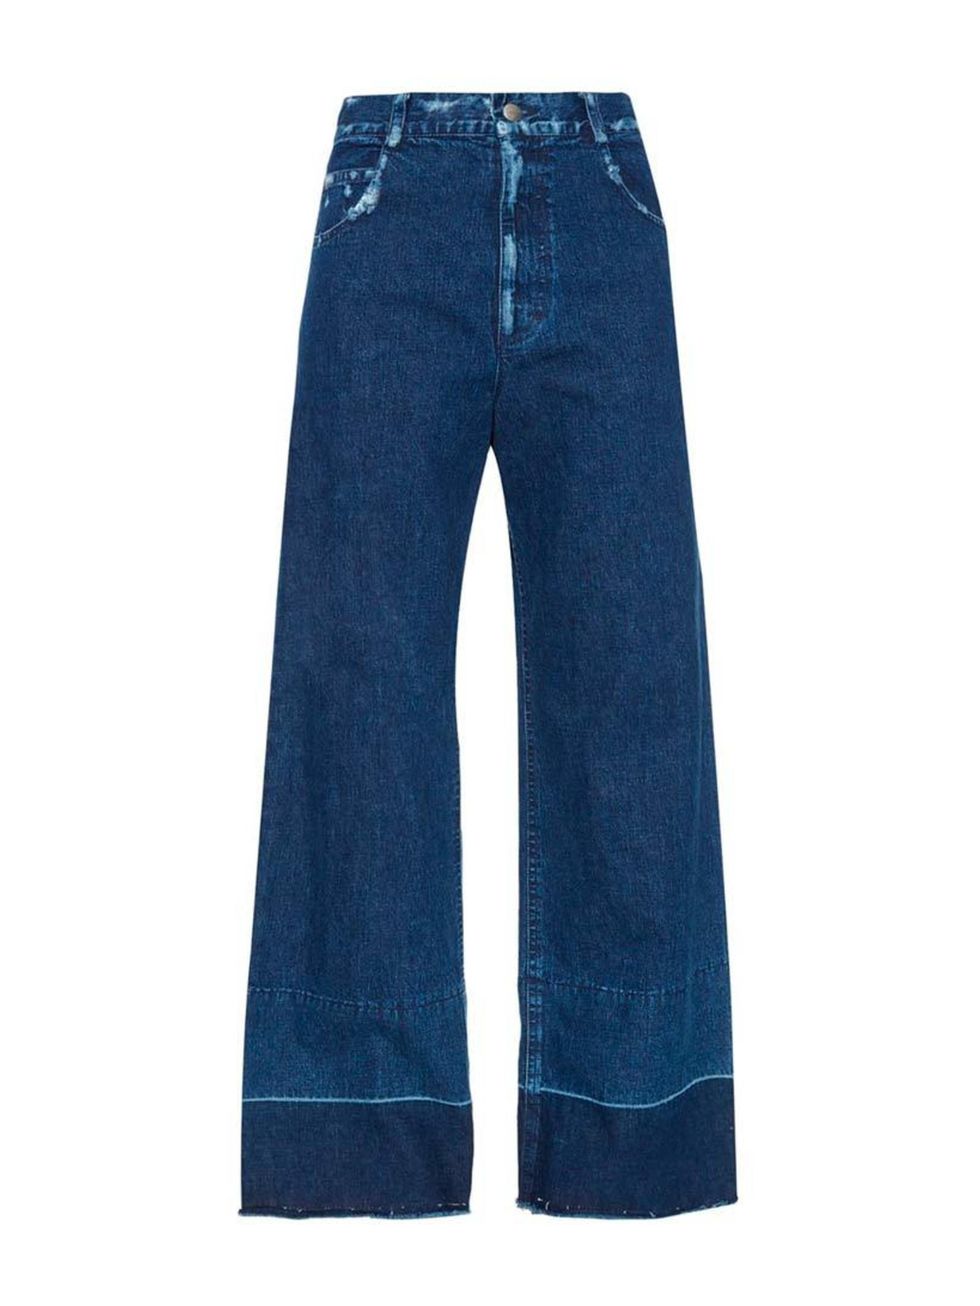 <p>Rachel Comey jeans, £310 at <a href="http://www.matchesfashion.com/products/Rachel-Comey-Legion-wide-leg-cropped-jeans-1017704#" target="_blank">MatchesFashion.com</a></p>